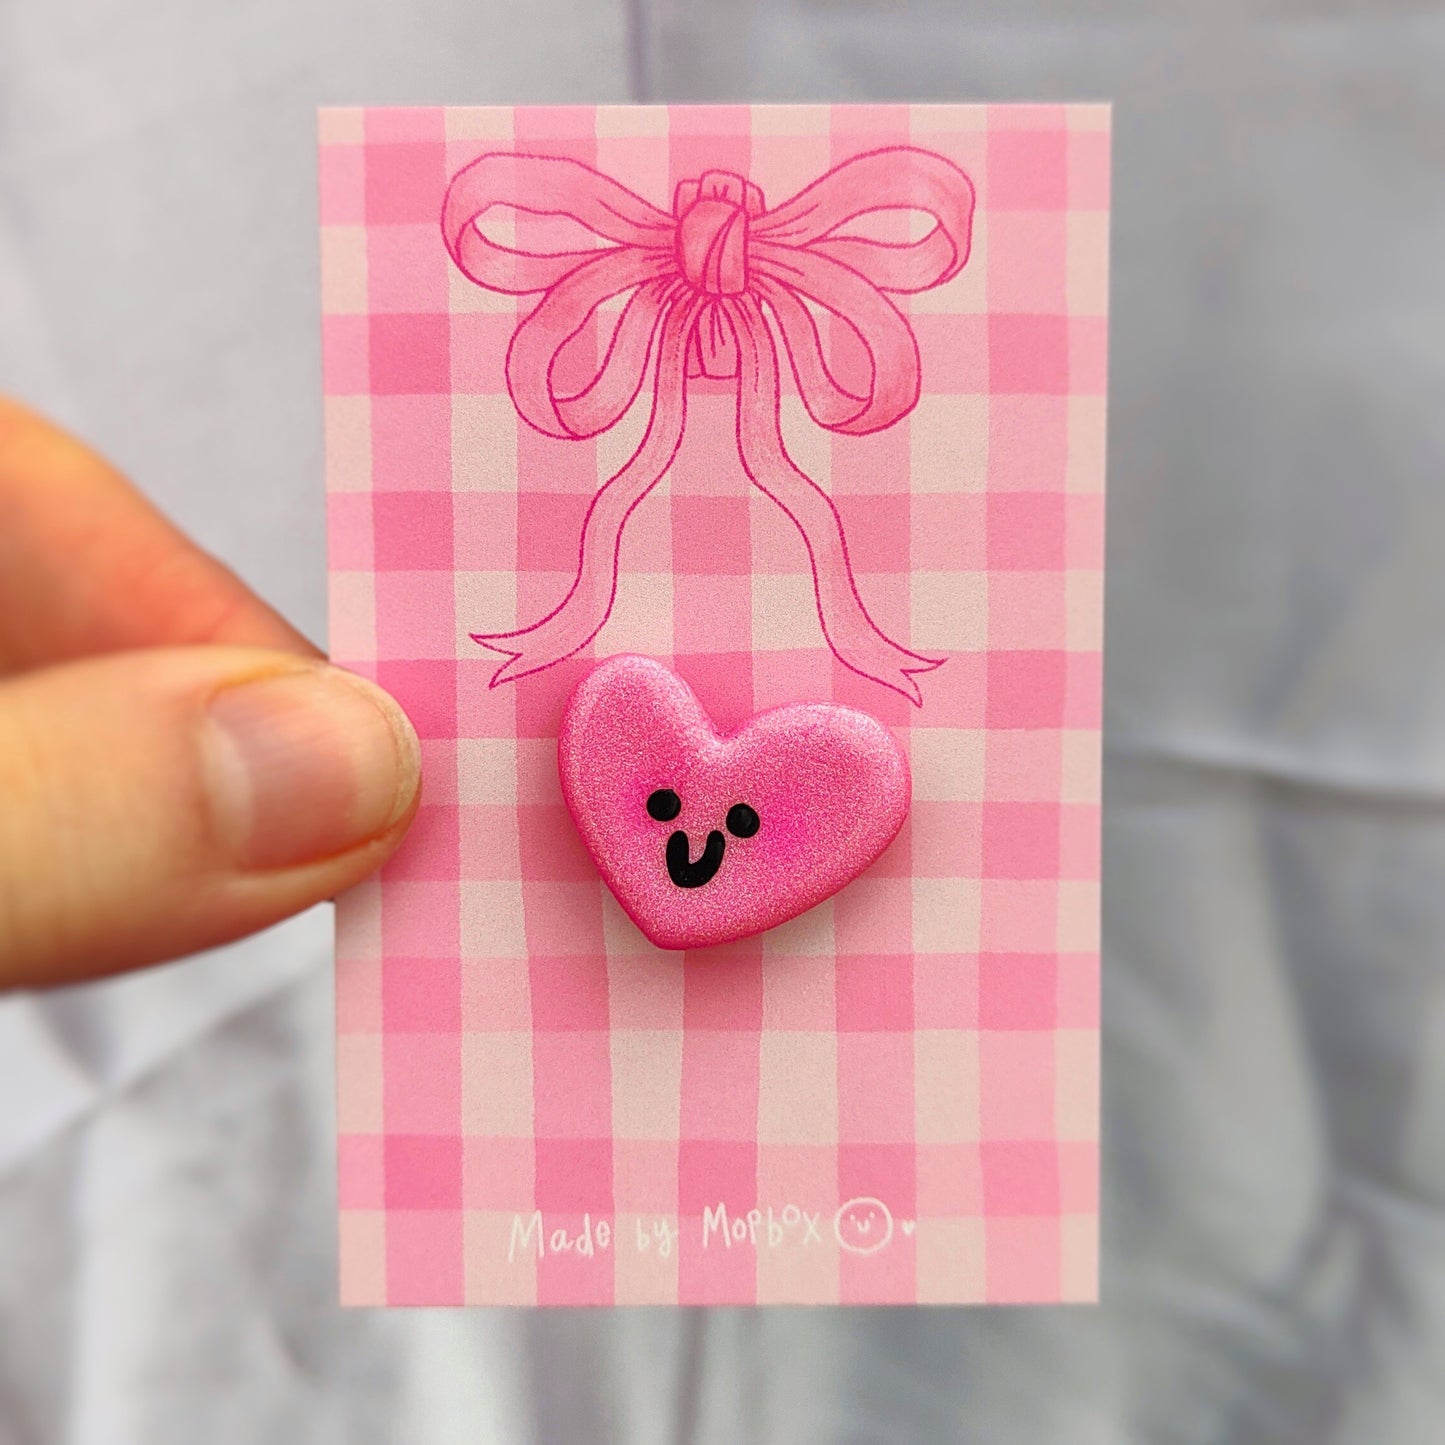 Love Heart Handmade Pin Badge -Happy Heart in Pink